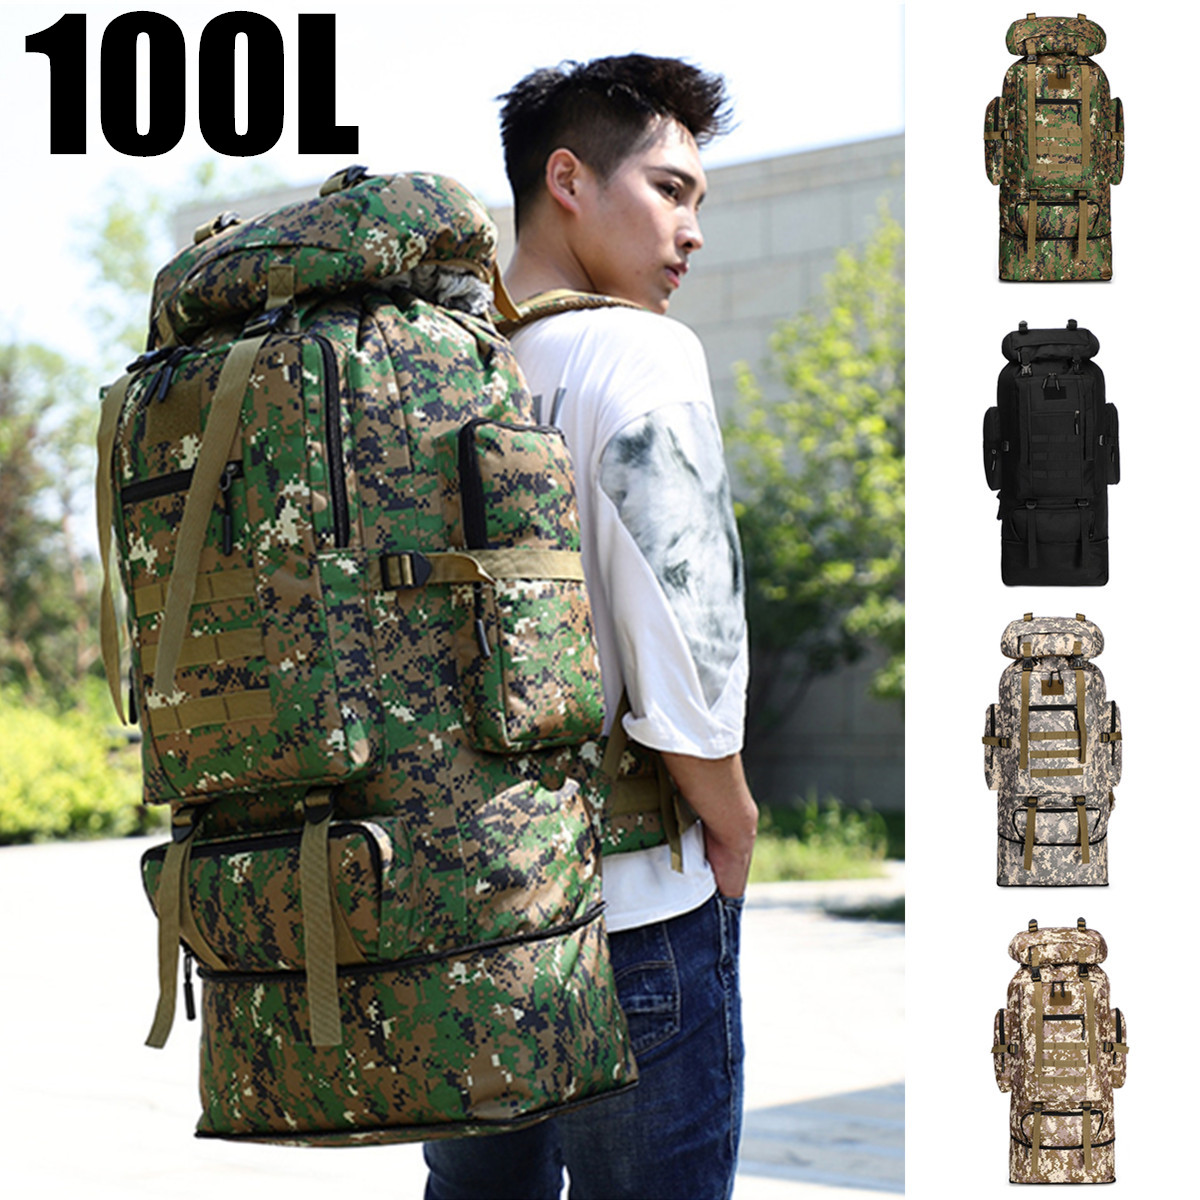 100L-Large-Capacity-Military-Tactical-Backpack-Outdoor-Hiking-Climbing-Camping-Bag-Travel-Rucksack-1589837-1